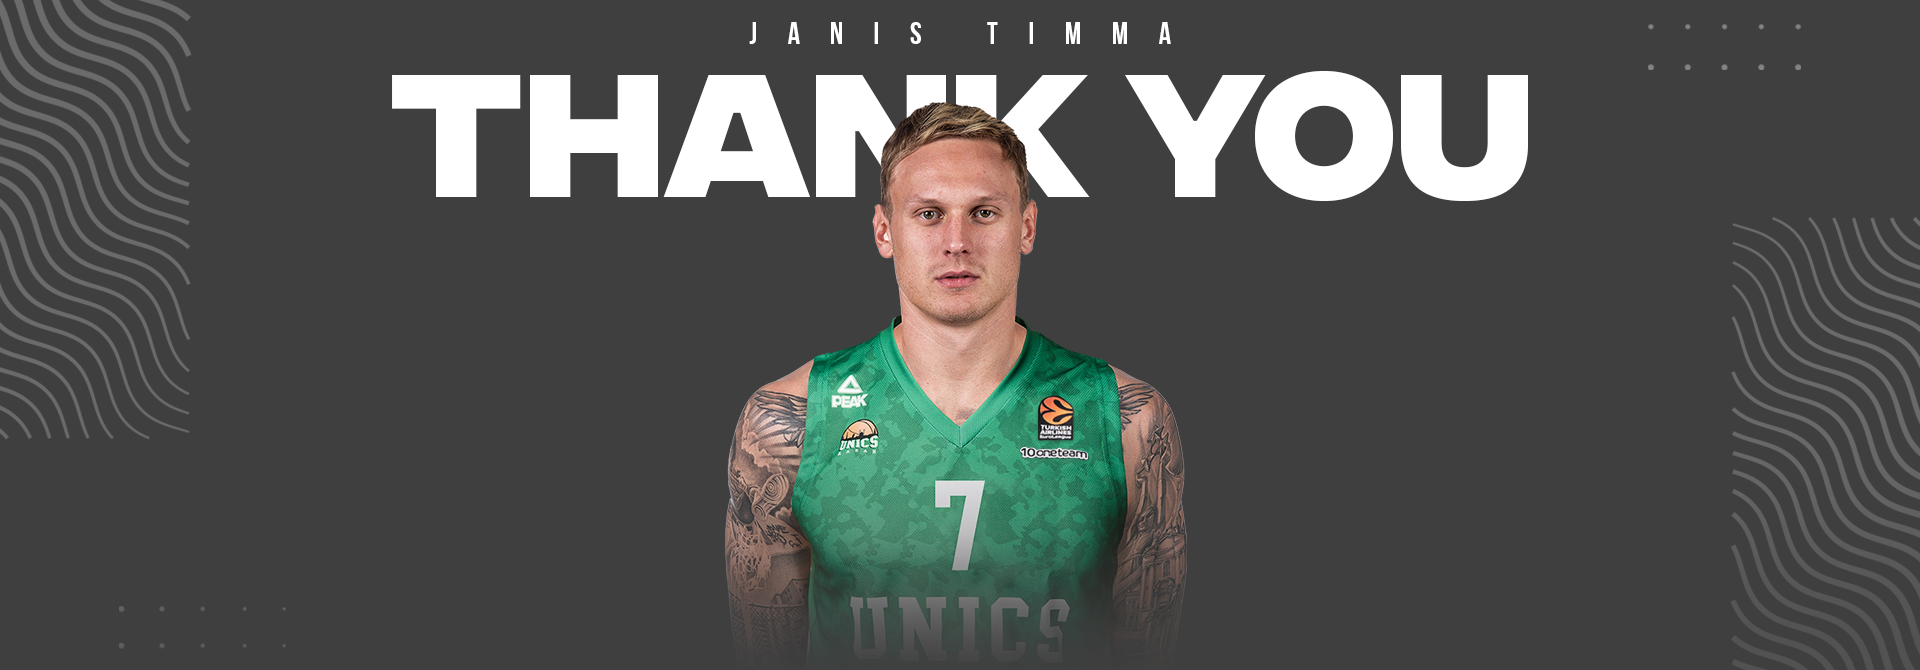 Янис Тимма покидает клуб по завершении срока контракта